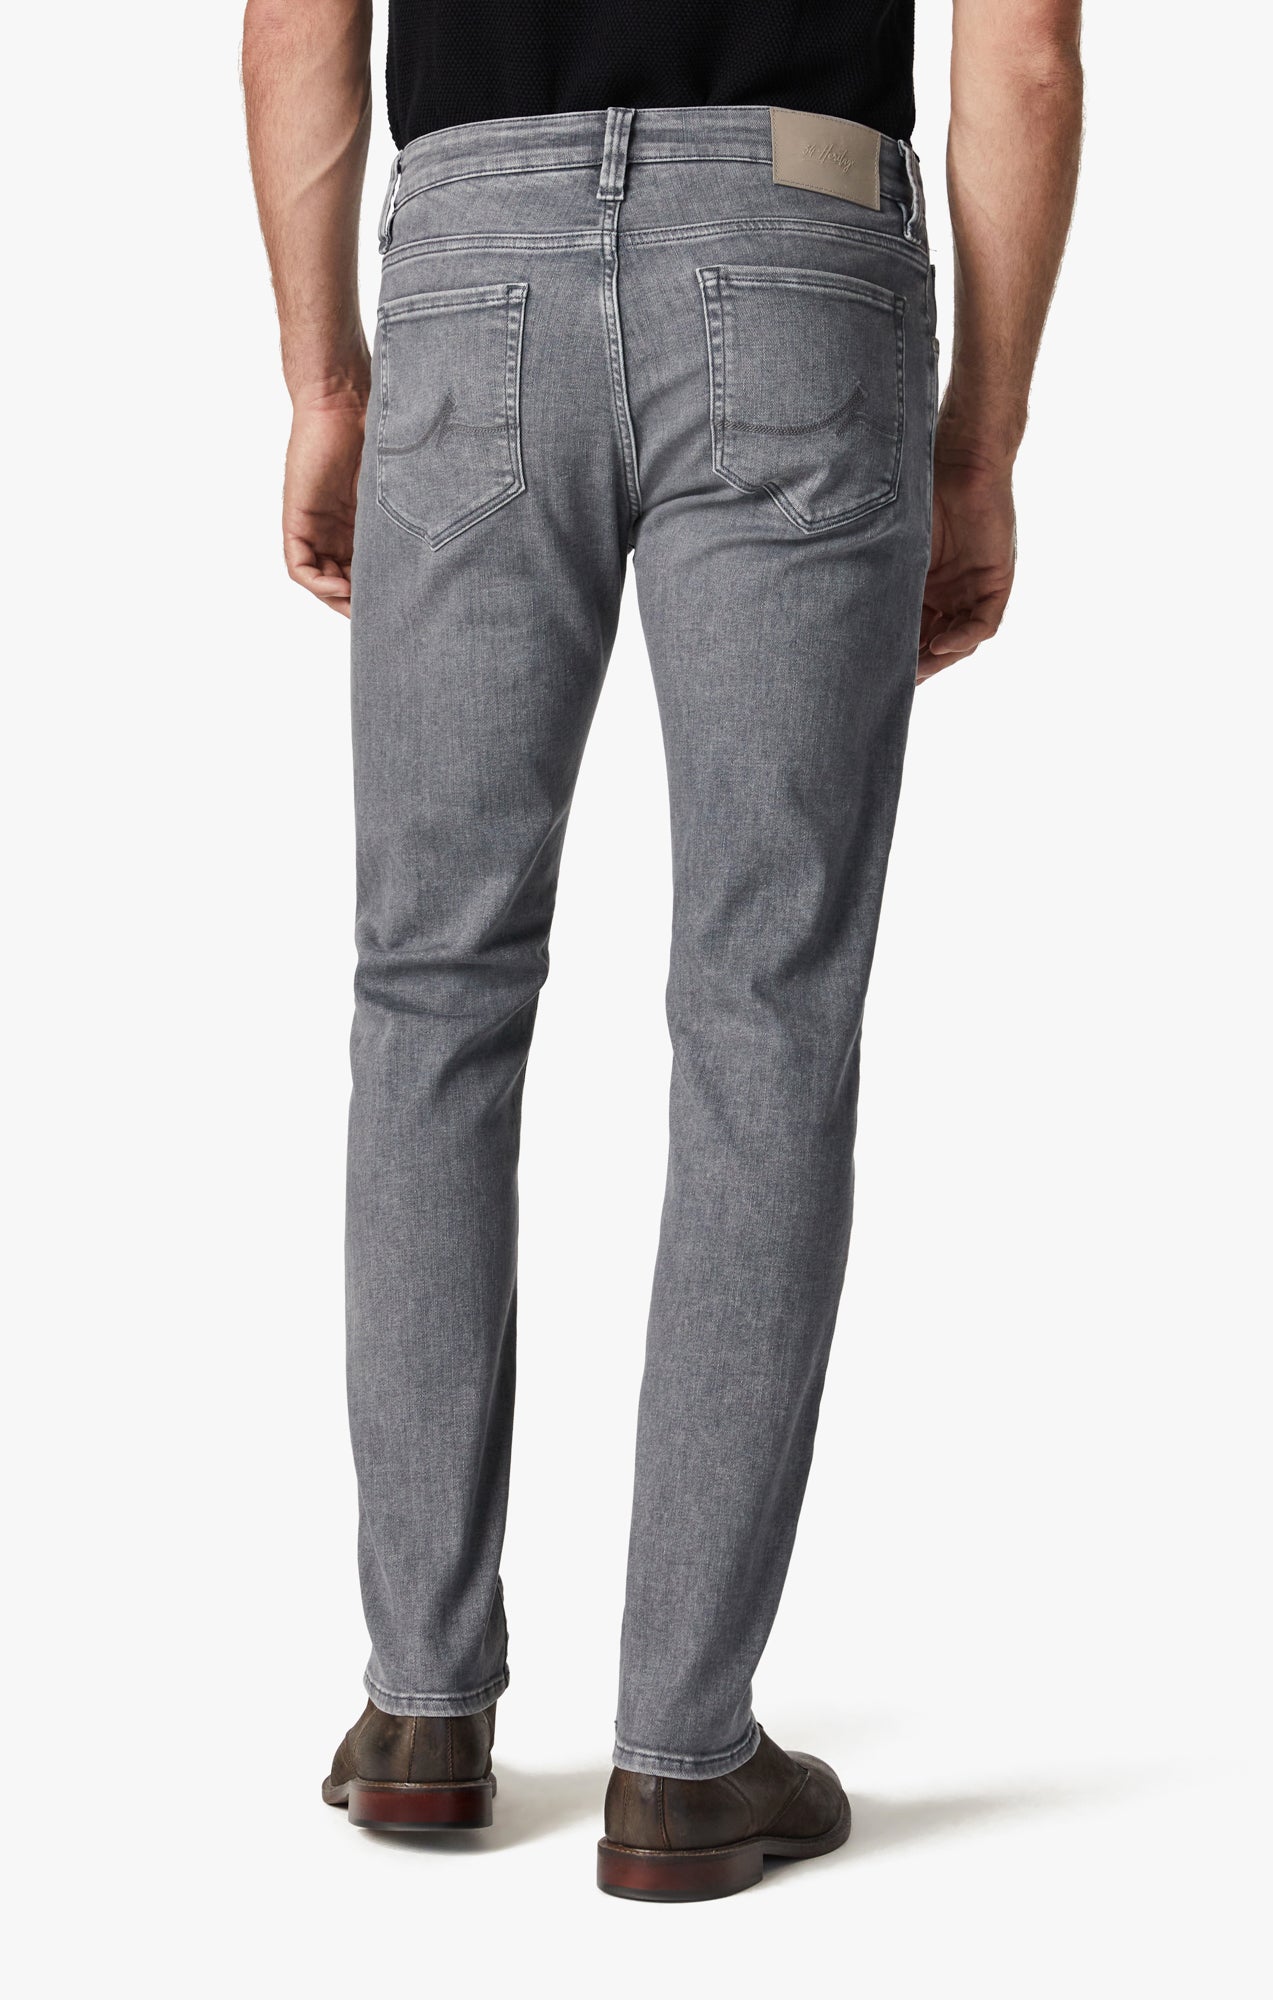 Men's Grey Jeans  Grey Jeans for Men – 34 Heritage Canada